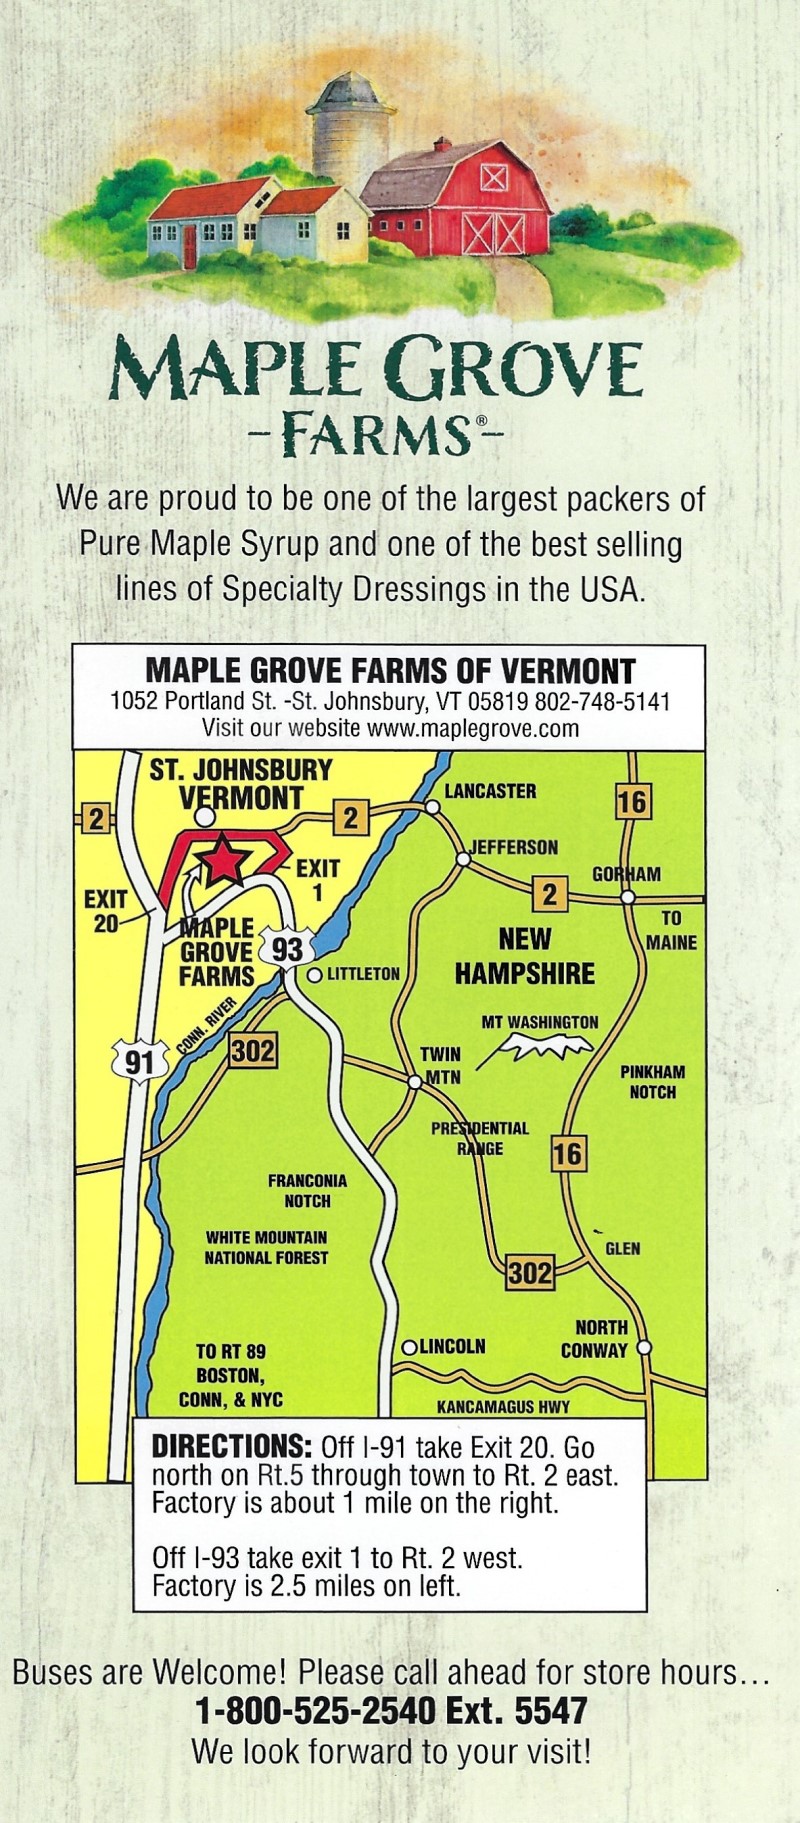 Maple Grove Farms brochure thumbnail